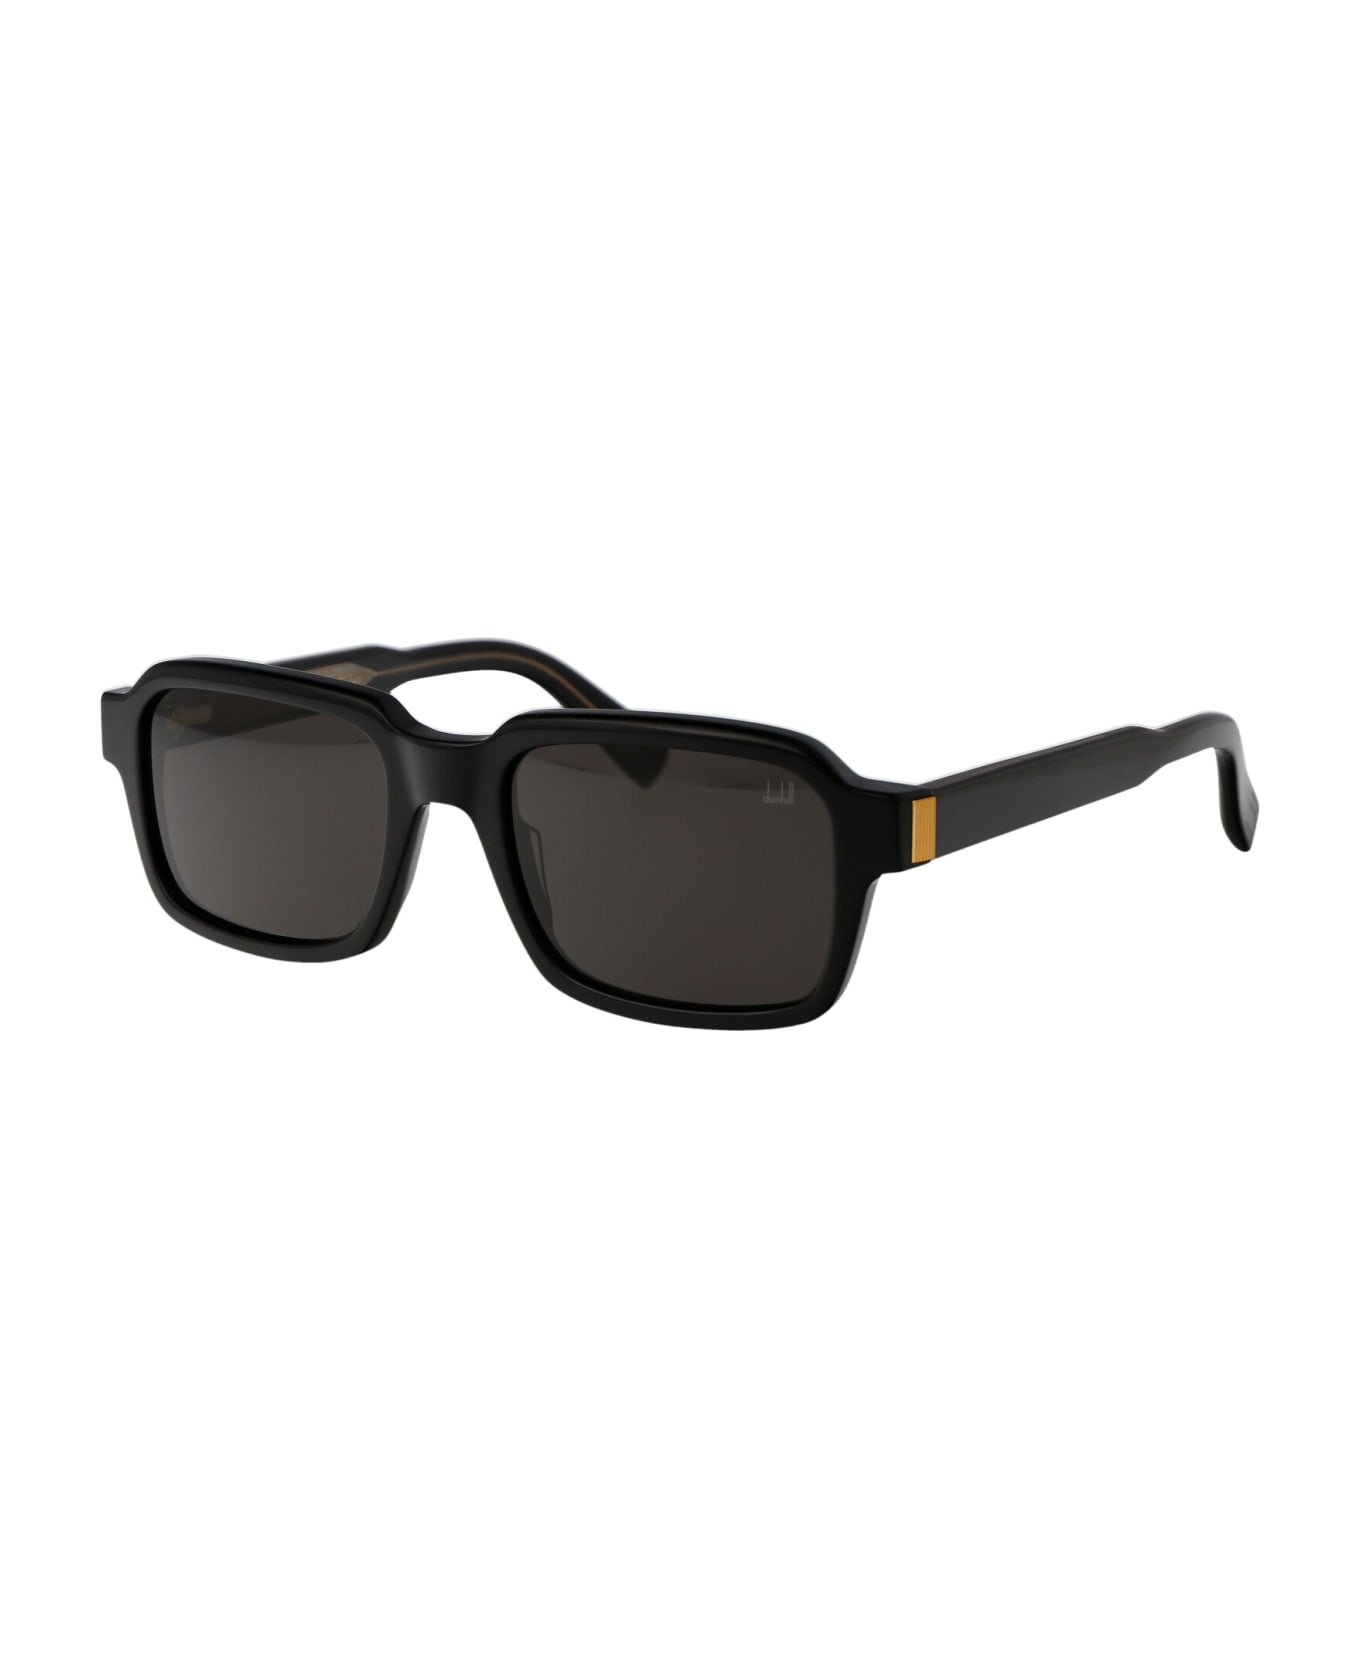 Dunhill Du0057s Sunglasses - 001 Sunglasses UVEX Sportstyle 229 S5320682216 Black Mat